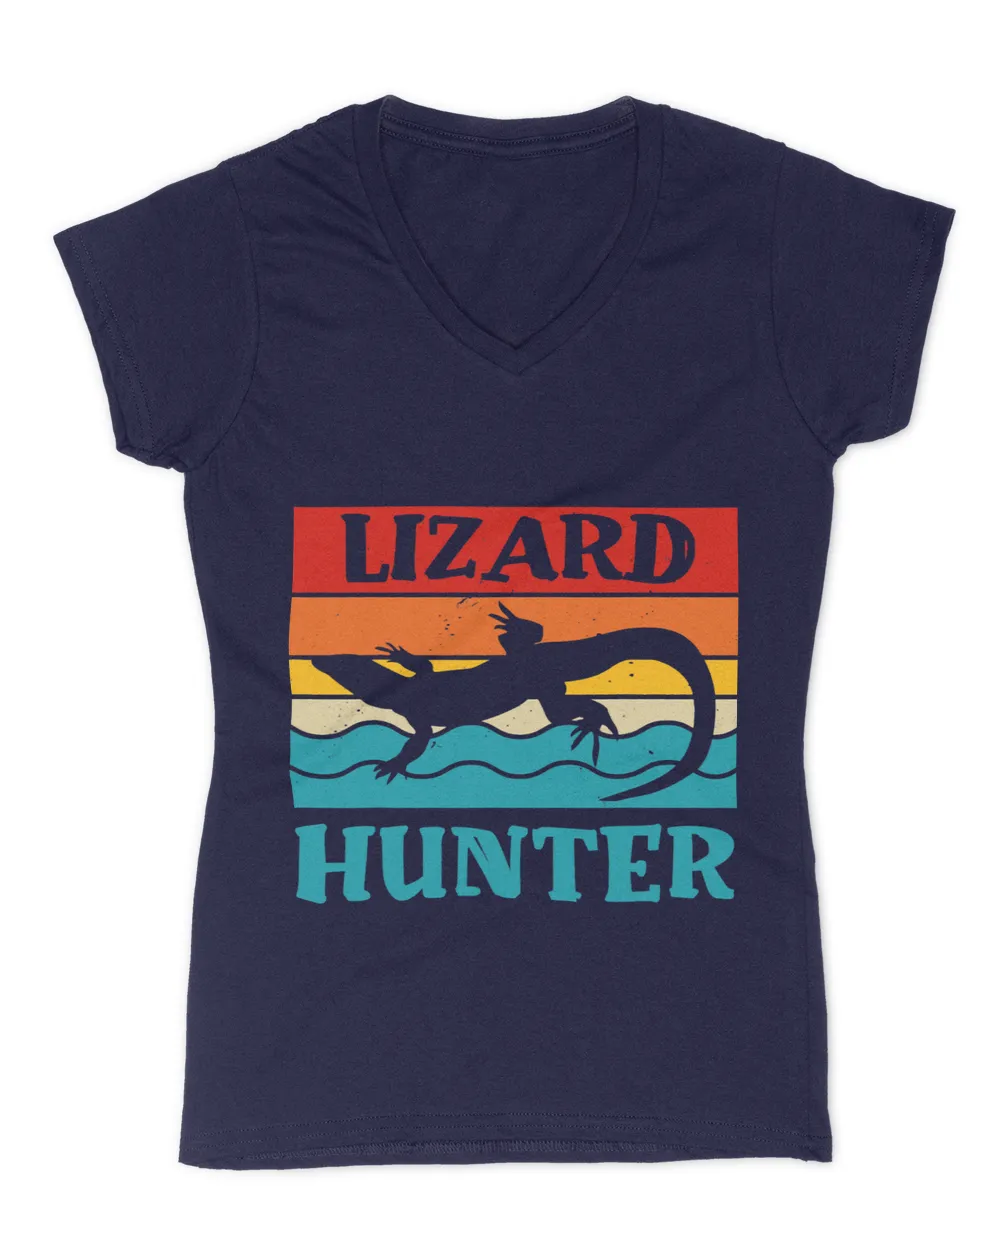 Lizard Lover Hunter Tshirt Mens Womens Funny Reptile Lover